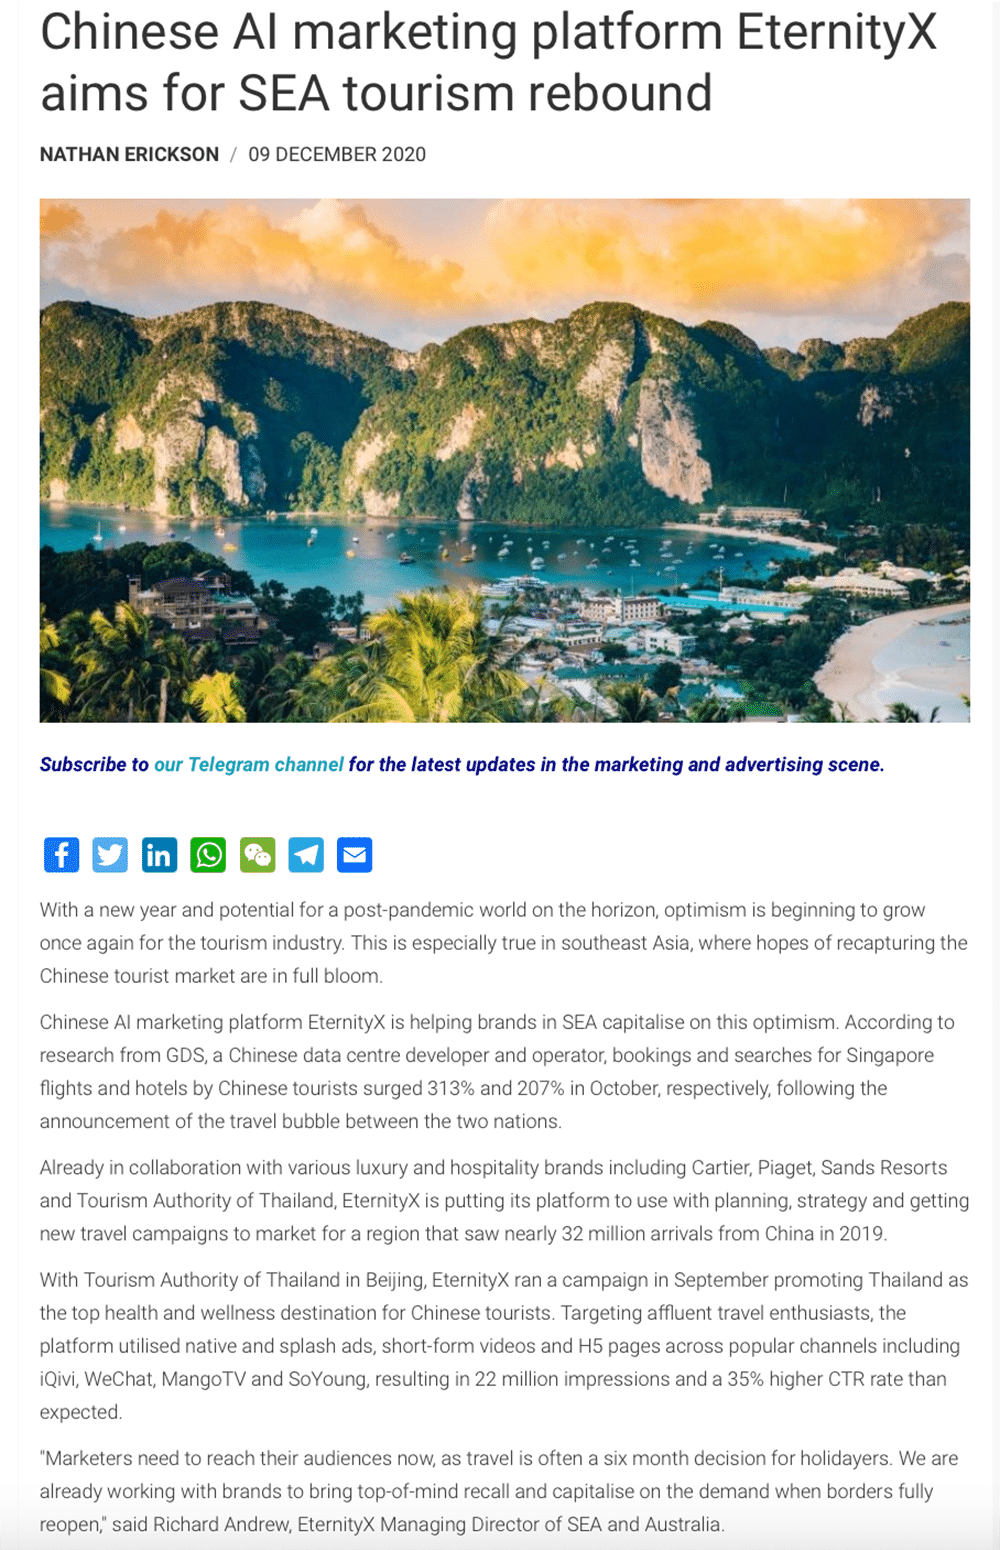 Chinese AI Marketing Platform EternityX Aims for SEA Tourism Rebound, Posted on Marketing Magazine